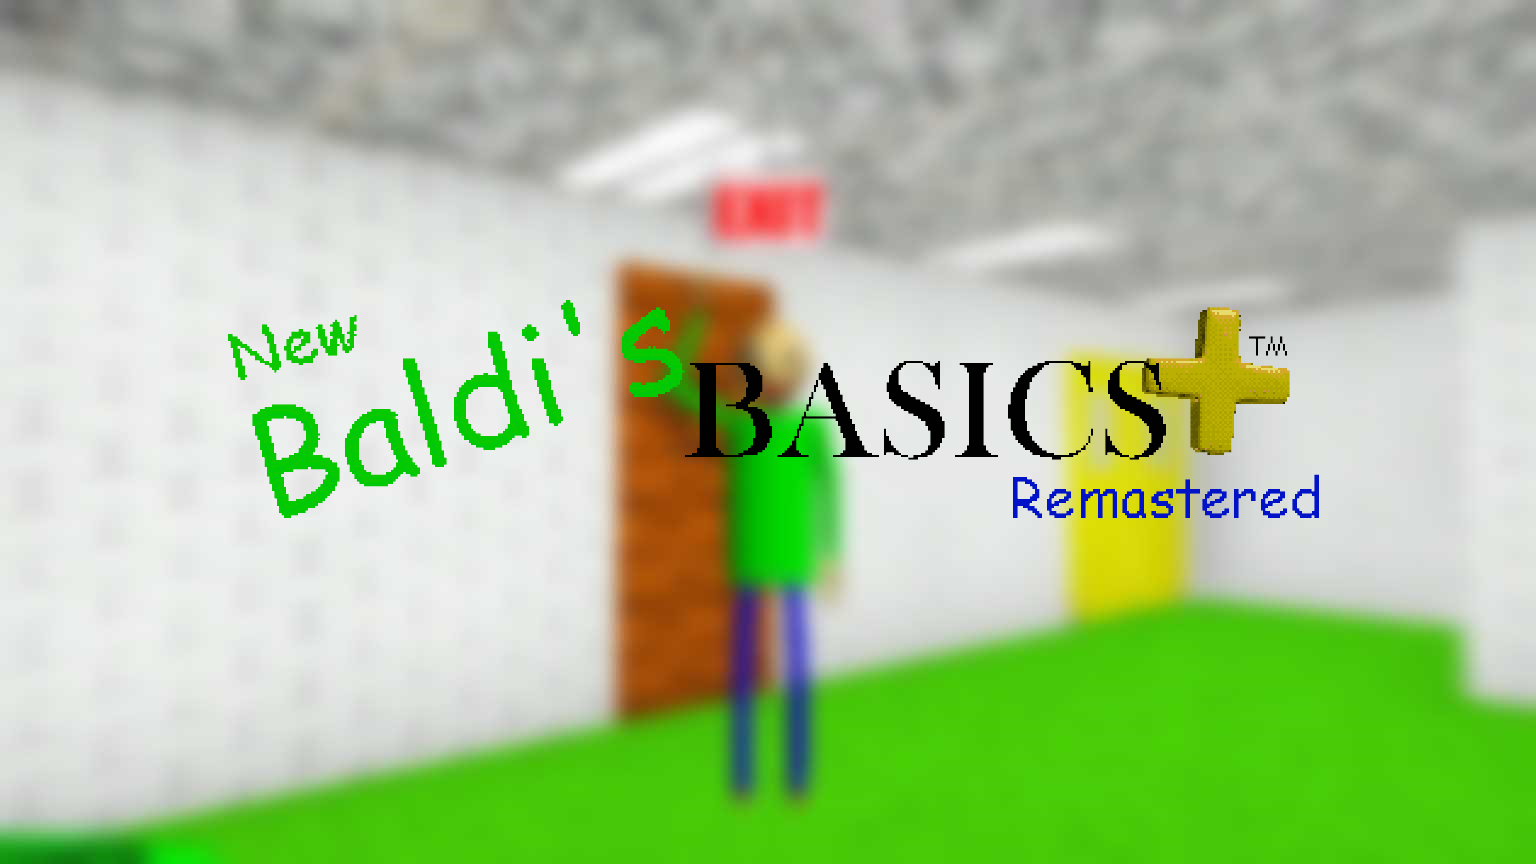 Baldi's Basics Full Game Pubilc Demo 2, Baldi's Basics Roblox Wiki